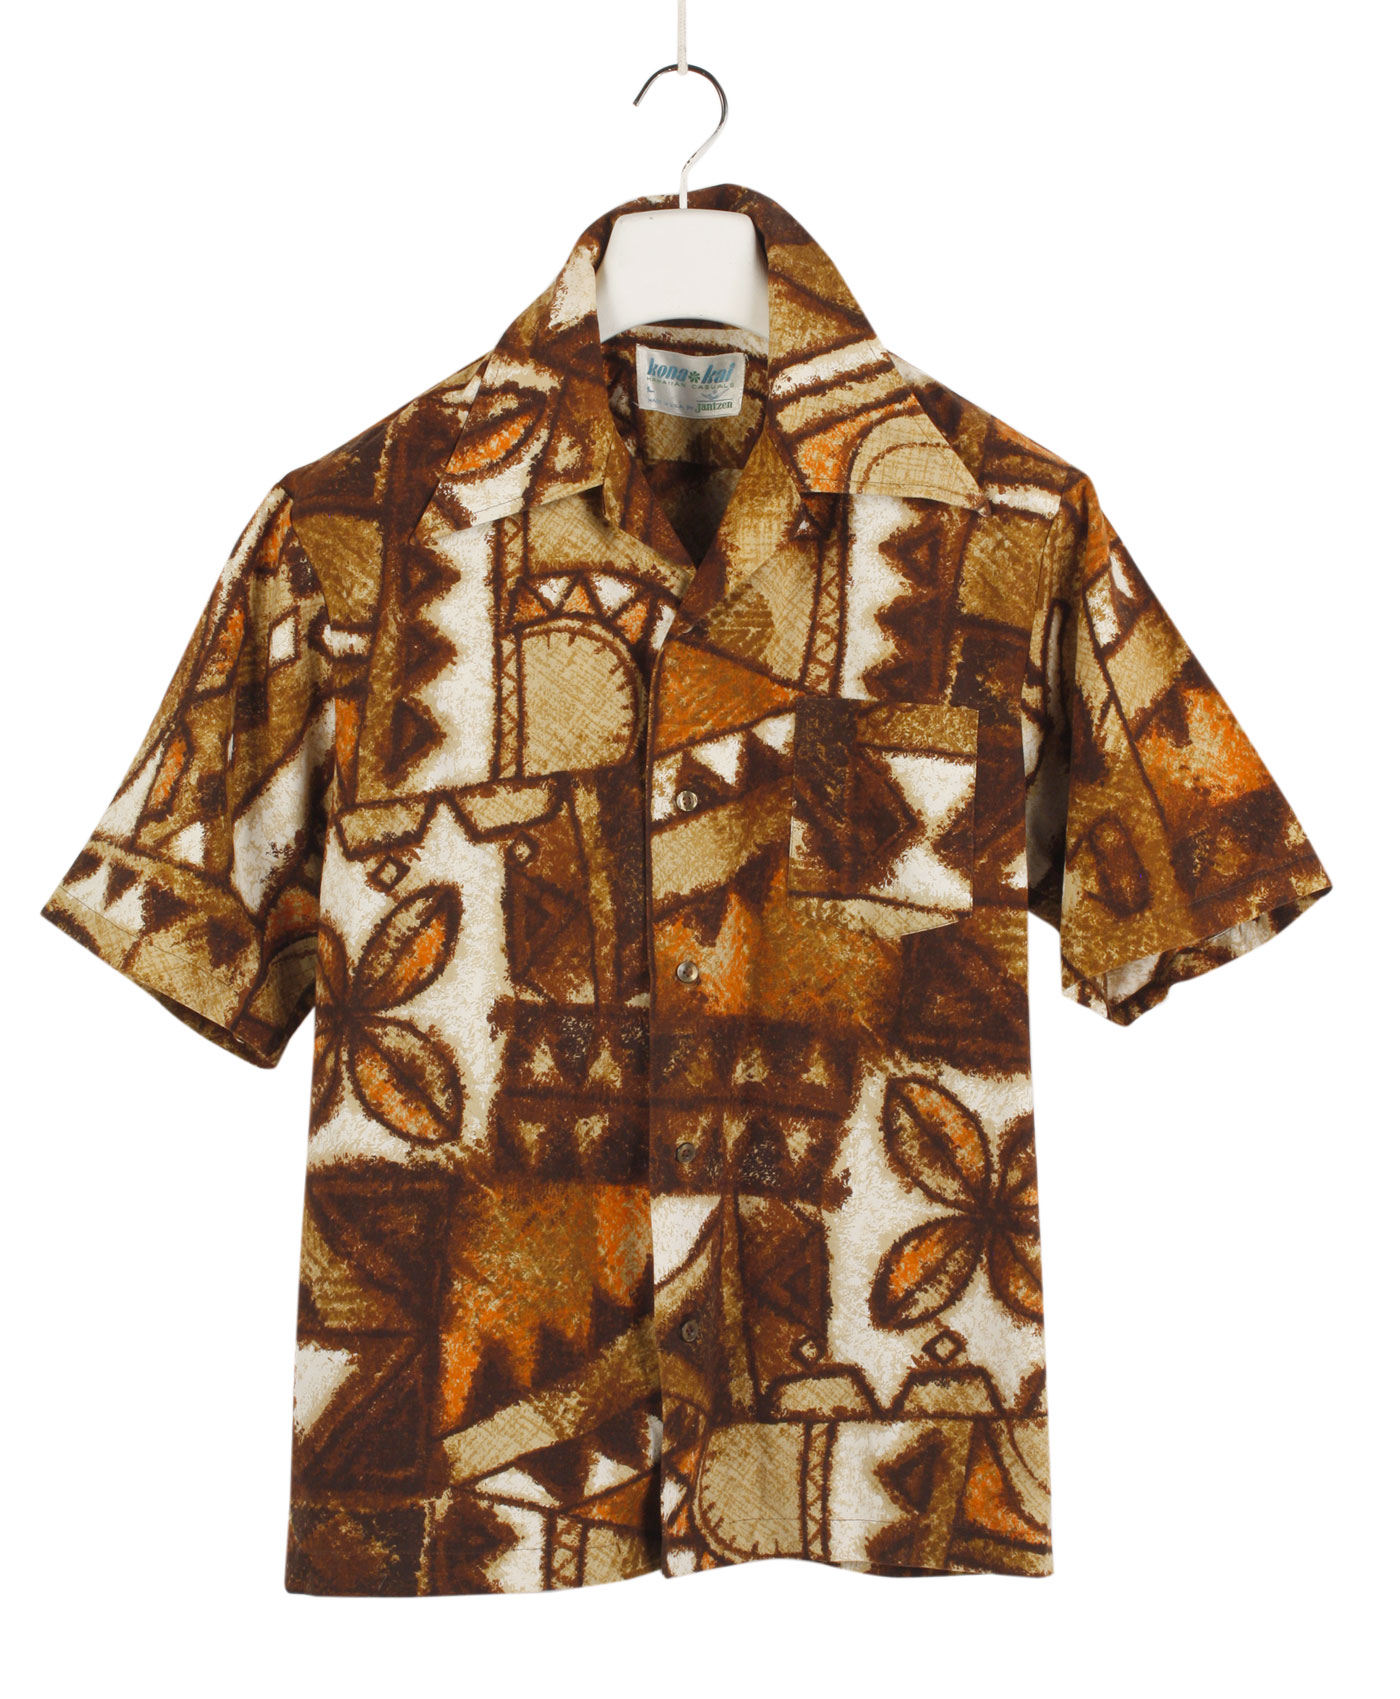 KONA-KAI JANTZEN Hawaiian shirt '60s ca.